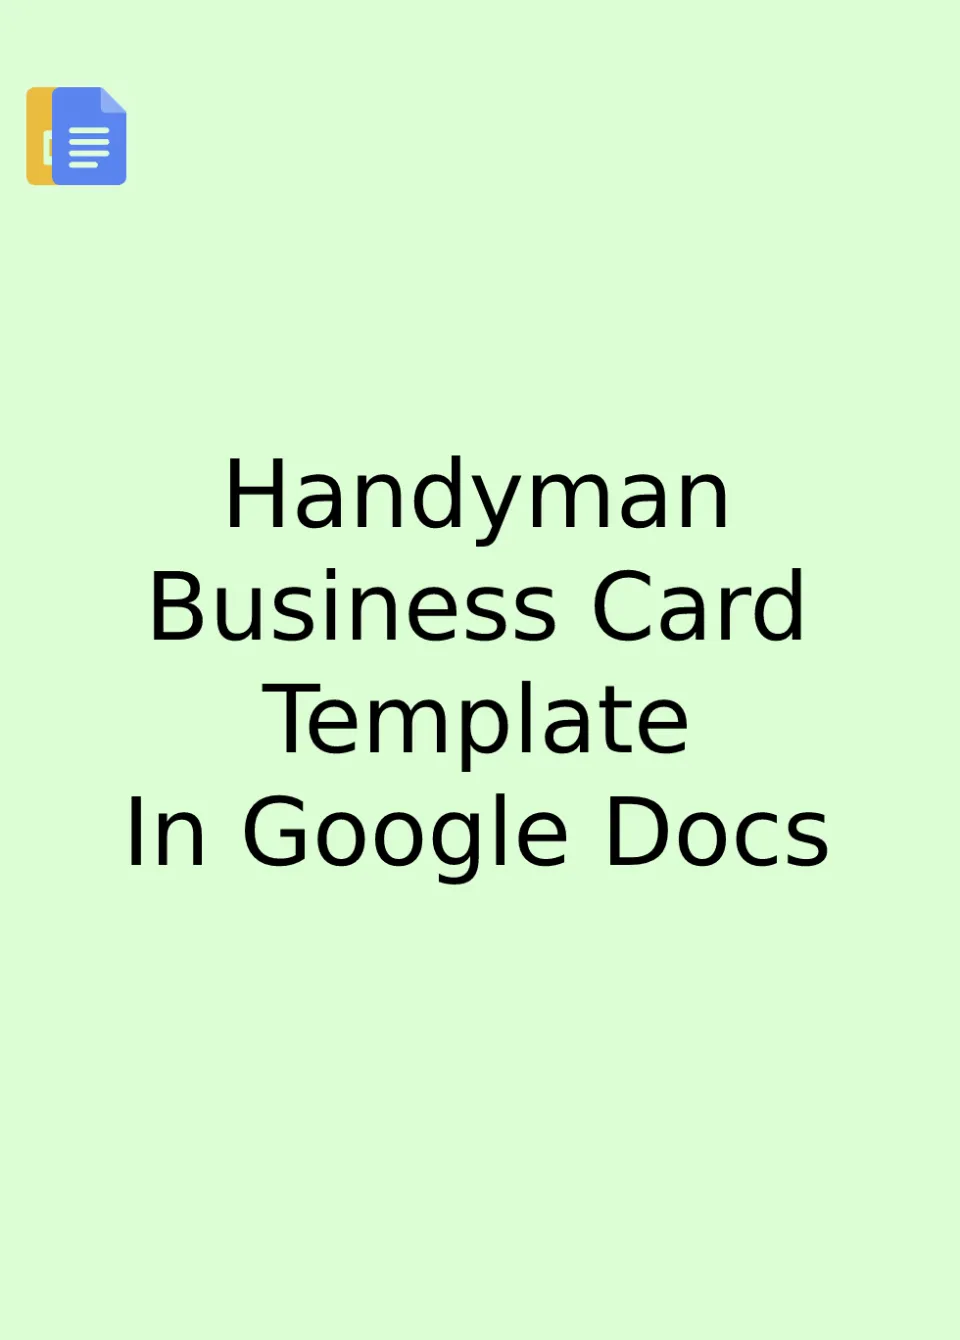 Handyman Business Card Template Google Docs